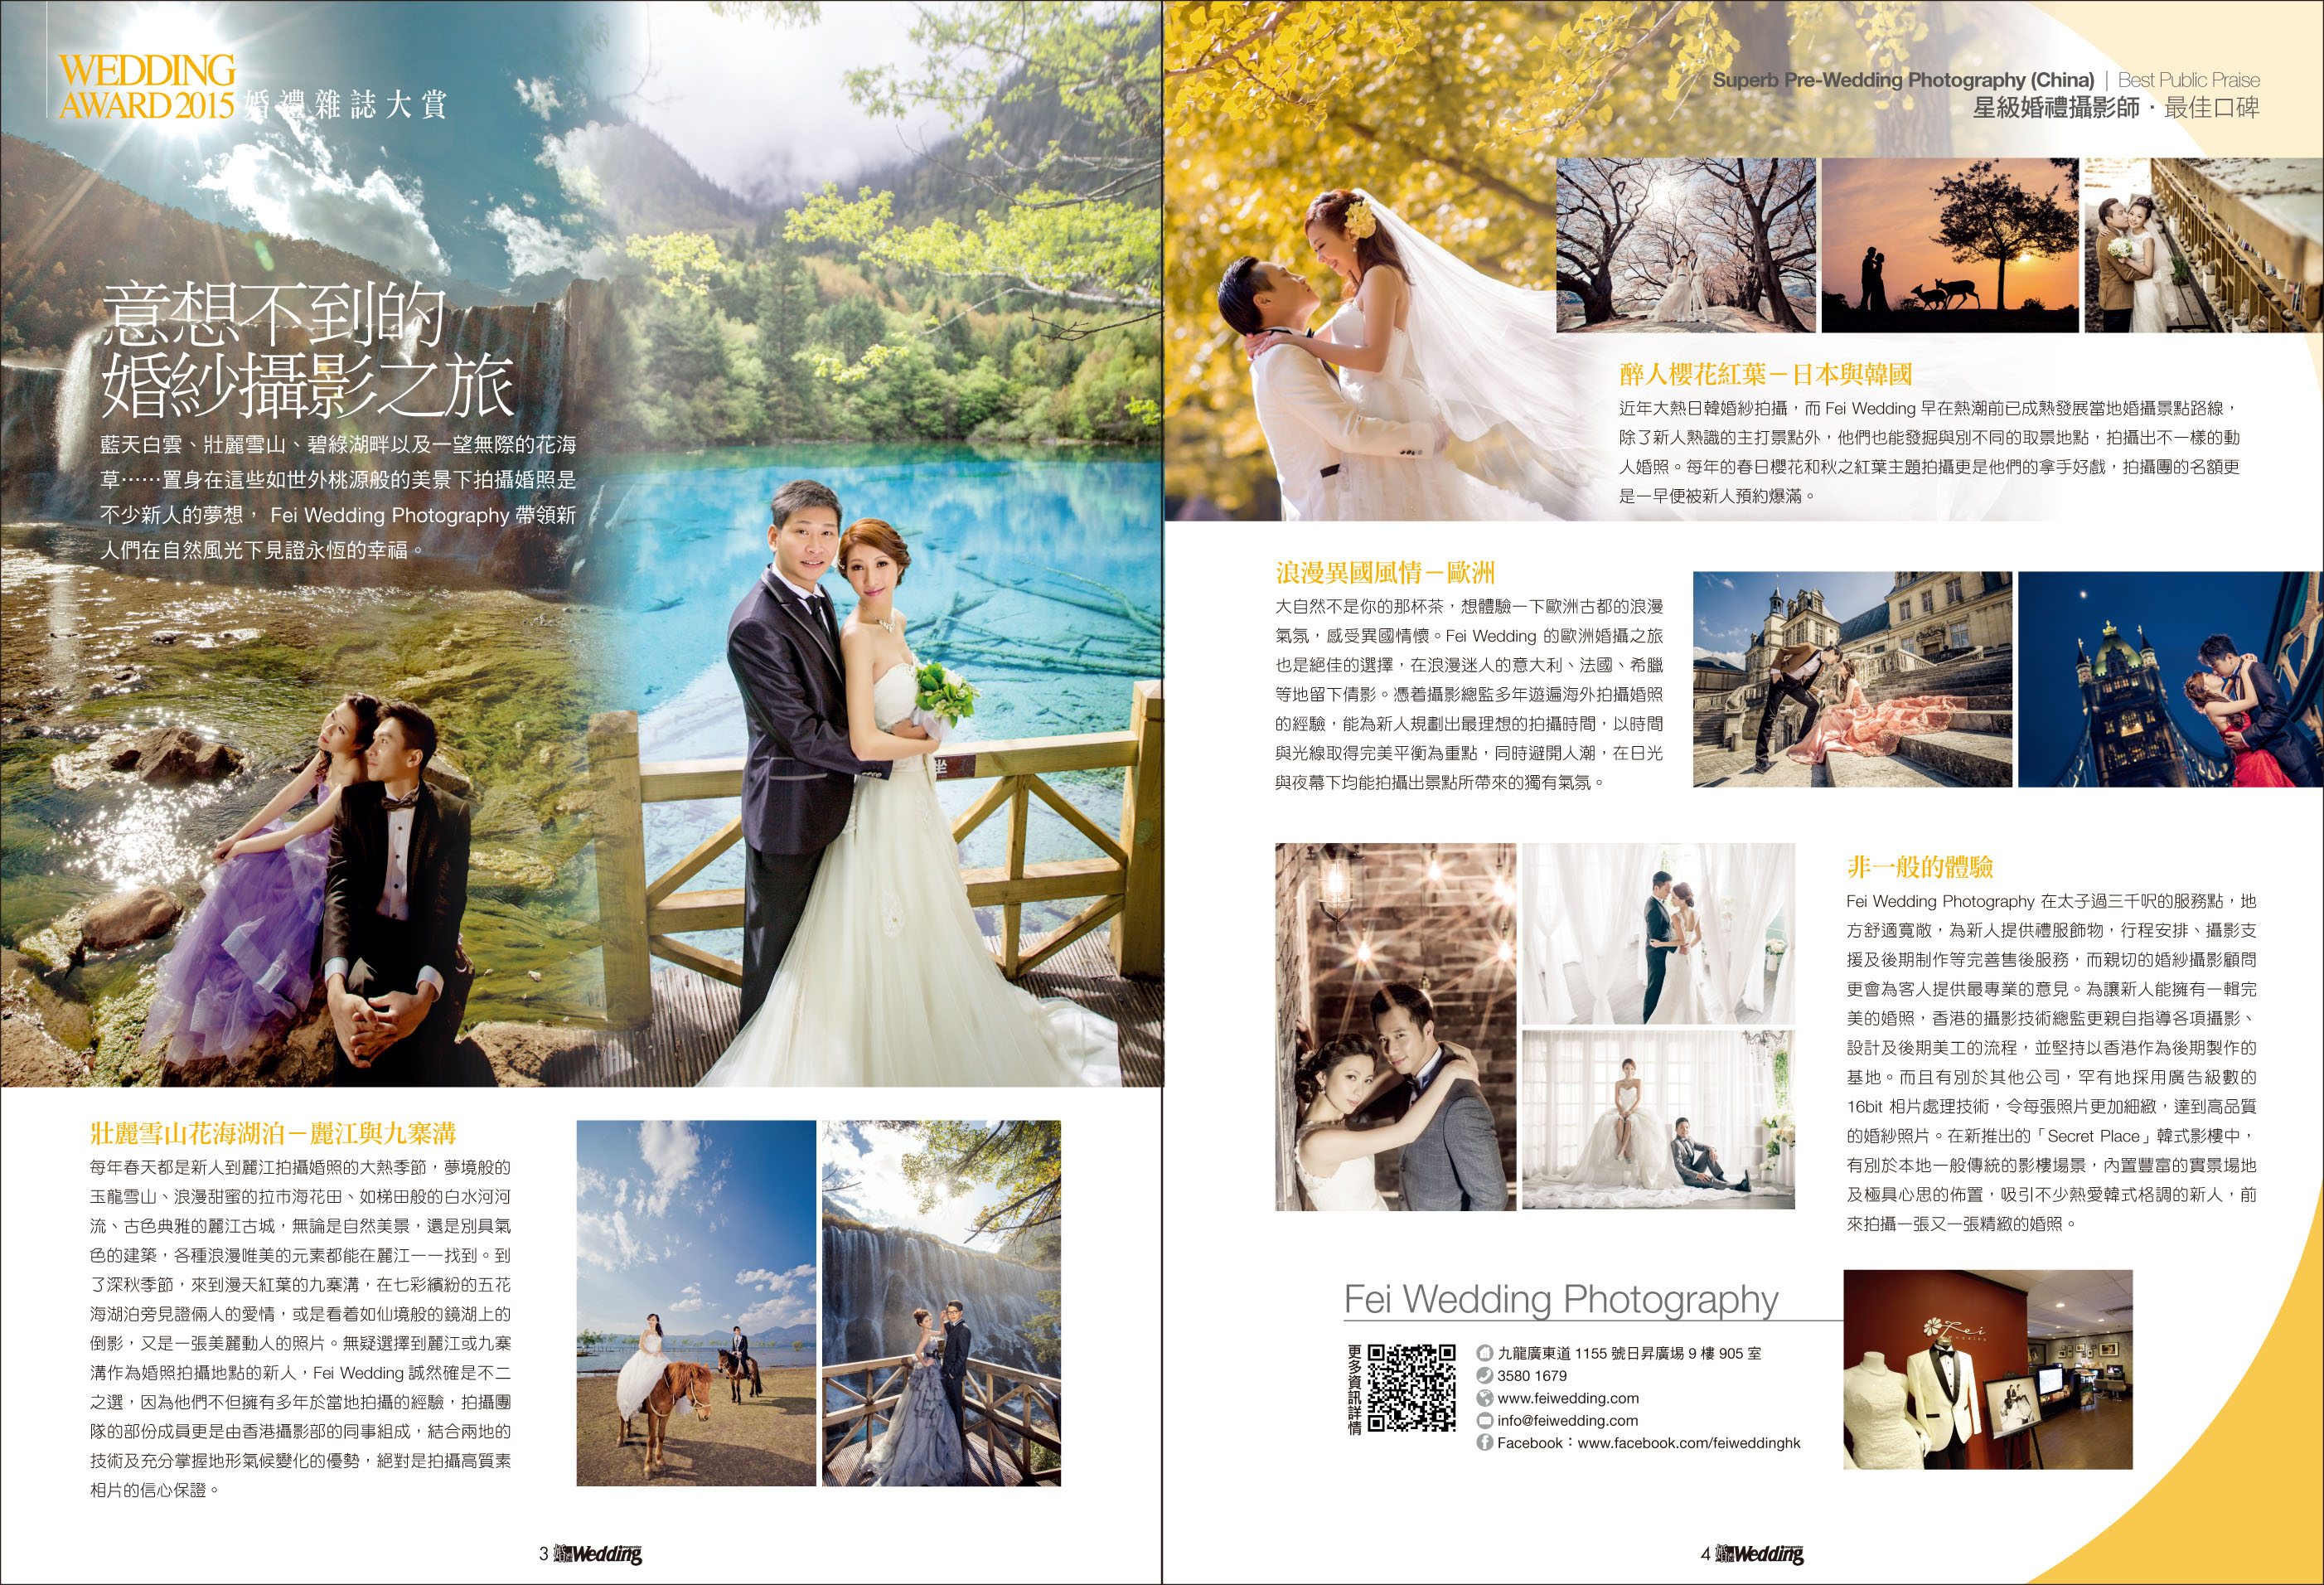 Fei Wedding 沉醉於大自然的懷抱 -  星級婚紗攝影 (中國) 最佳口碑 (婚禮雜誌 No. 173)